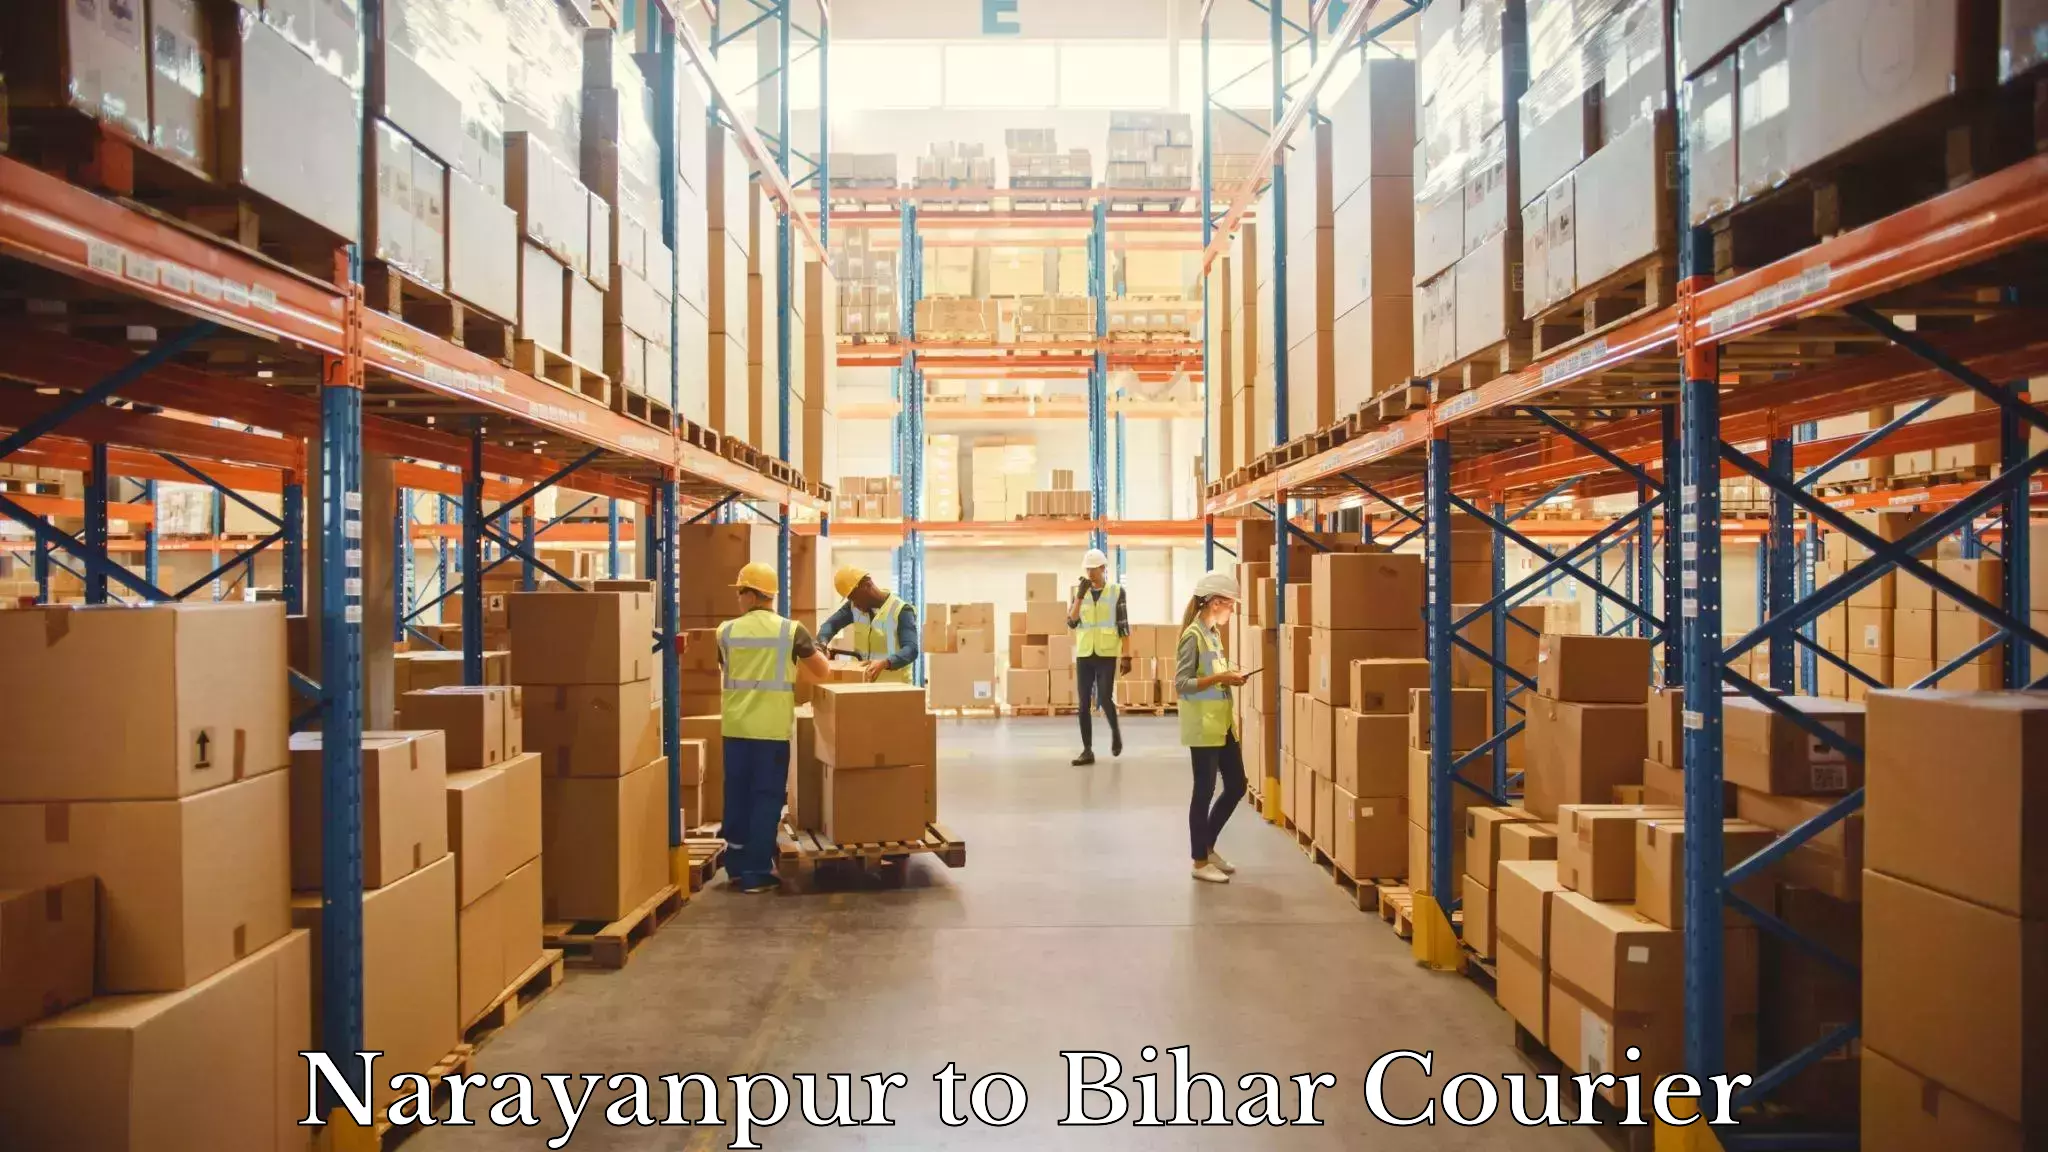 Courier service partnerships Narayanpur to Darbhanga